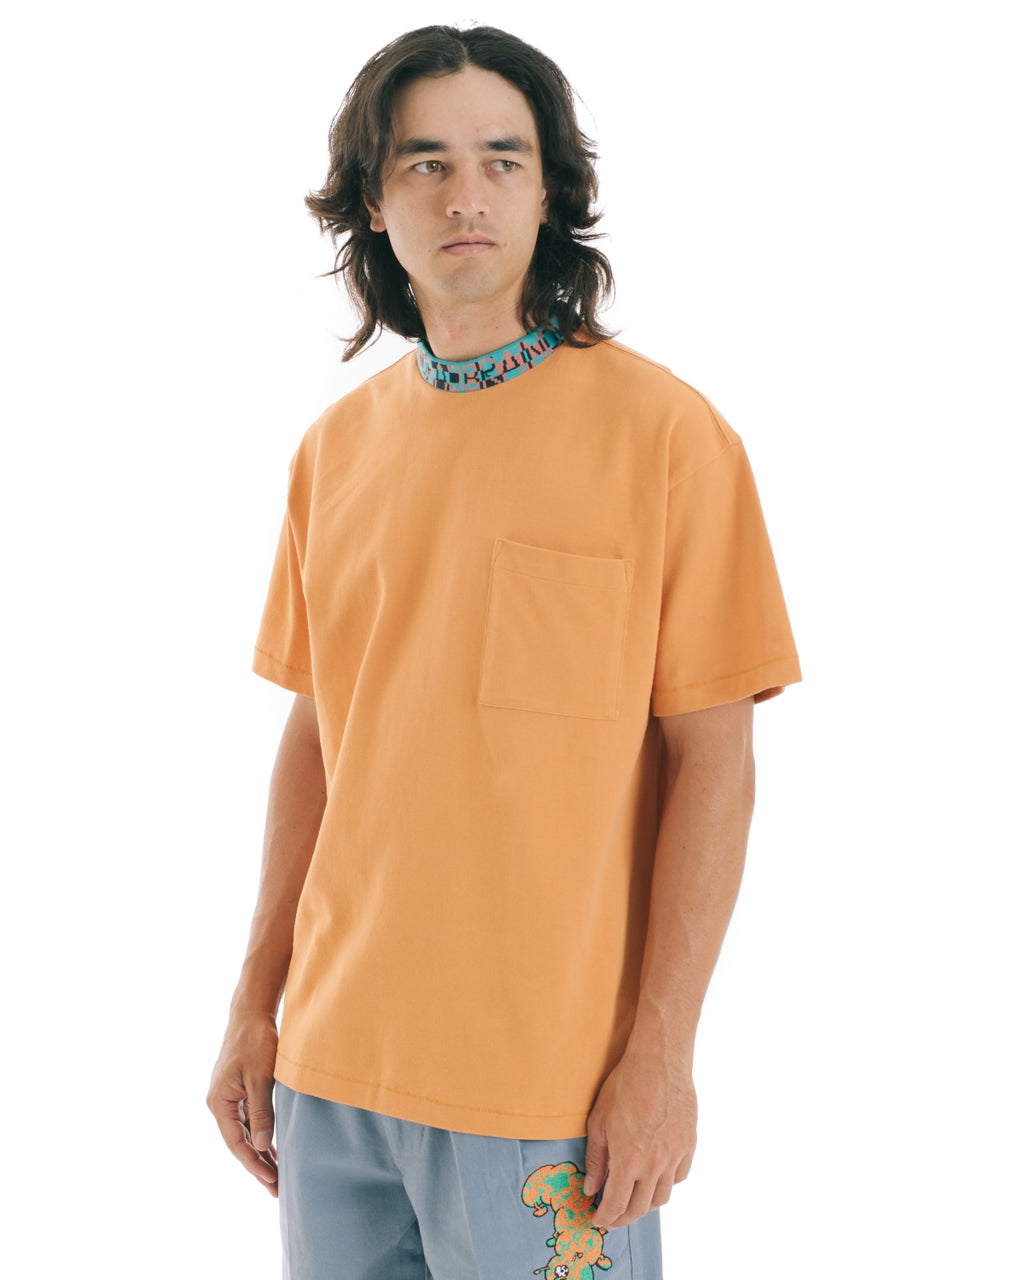 Jacquarded Collar Pique Mock Neck Shirt - Orange 4